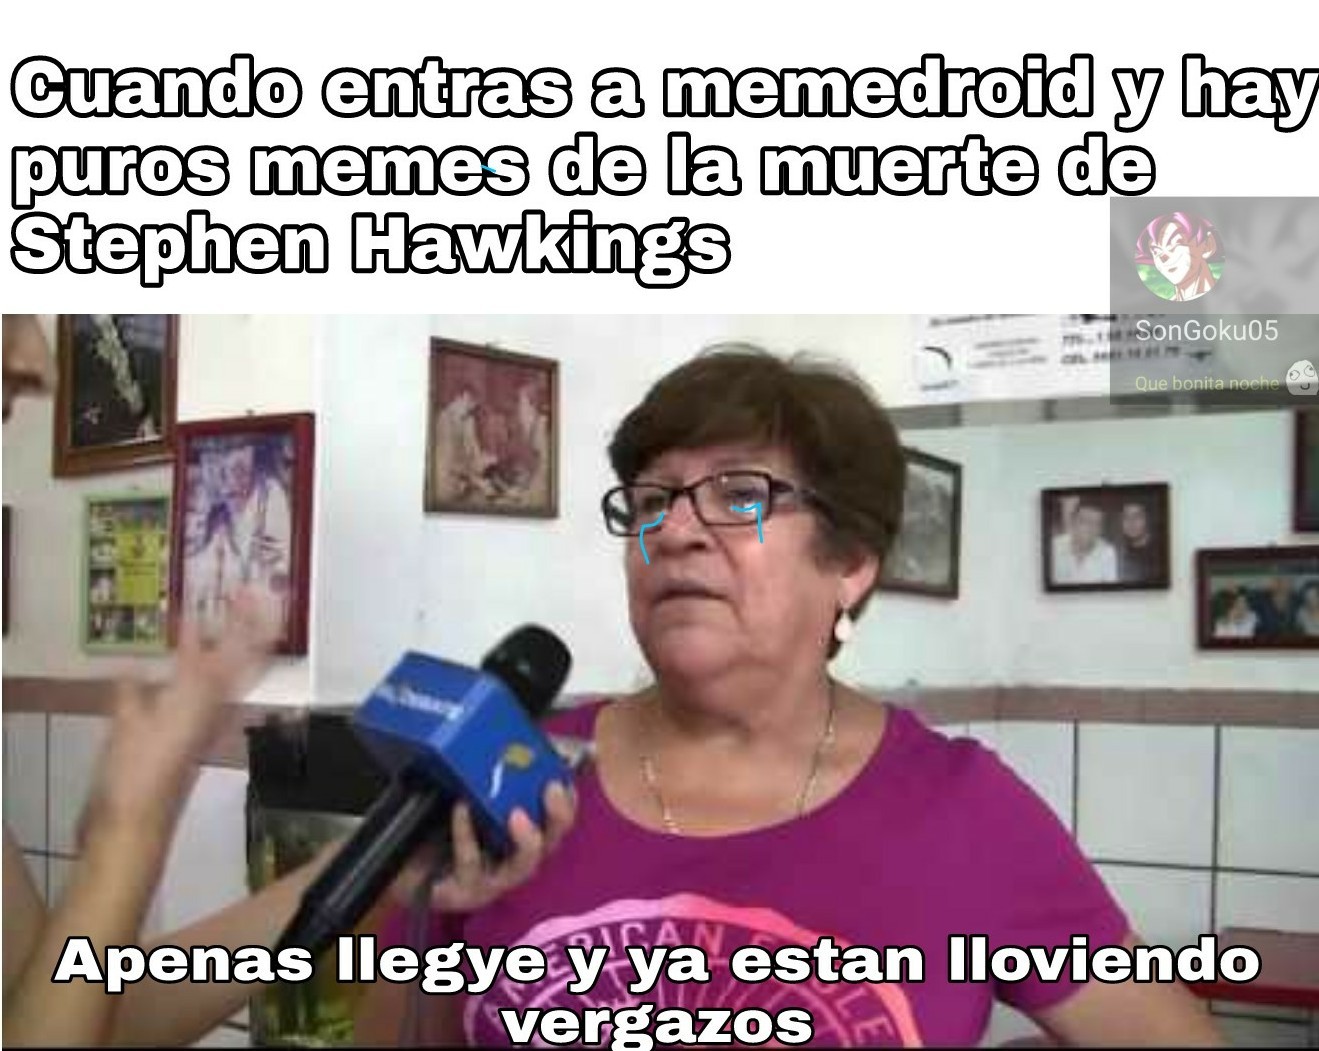 R.I.P Stephen Hawking 1942 - 2018 :( - meme